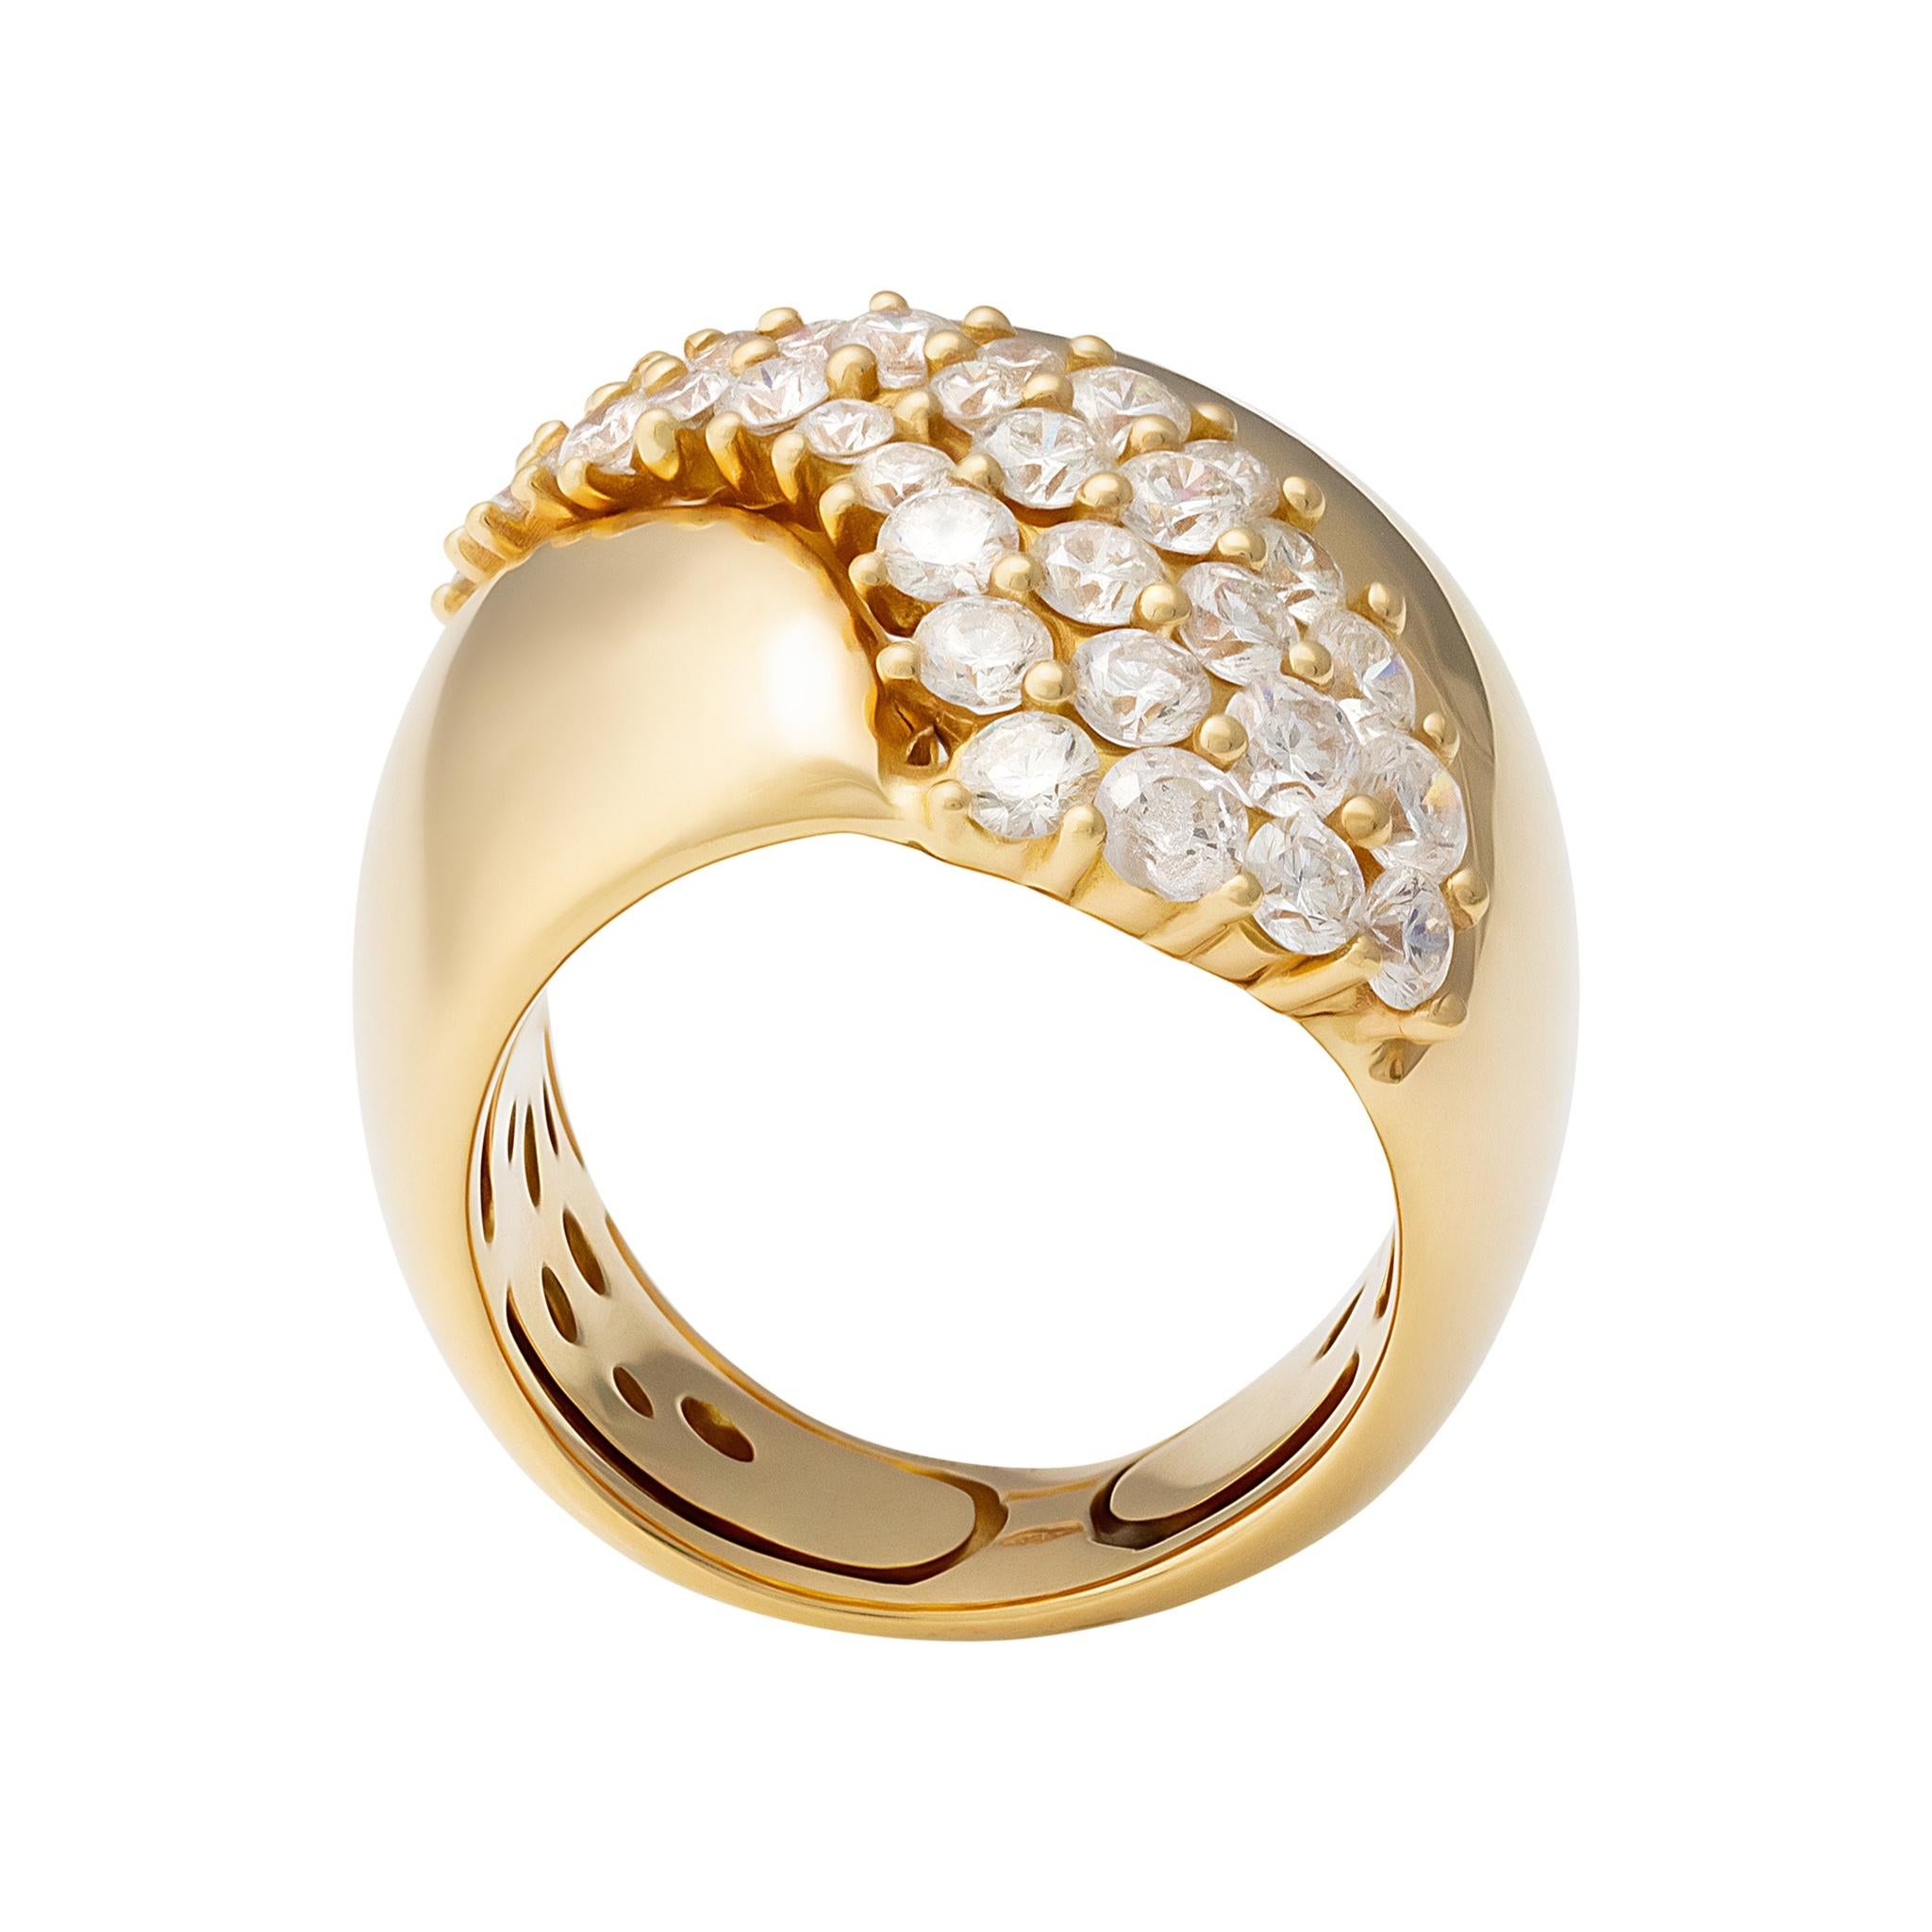 Stefan Hafner Ring
Diamond: 1.98ctw
Size: 6.5
Italian made
SKU: BLU01228
Retail price: $17,950.00